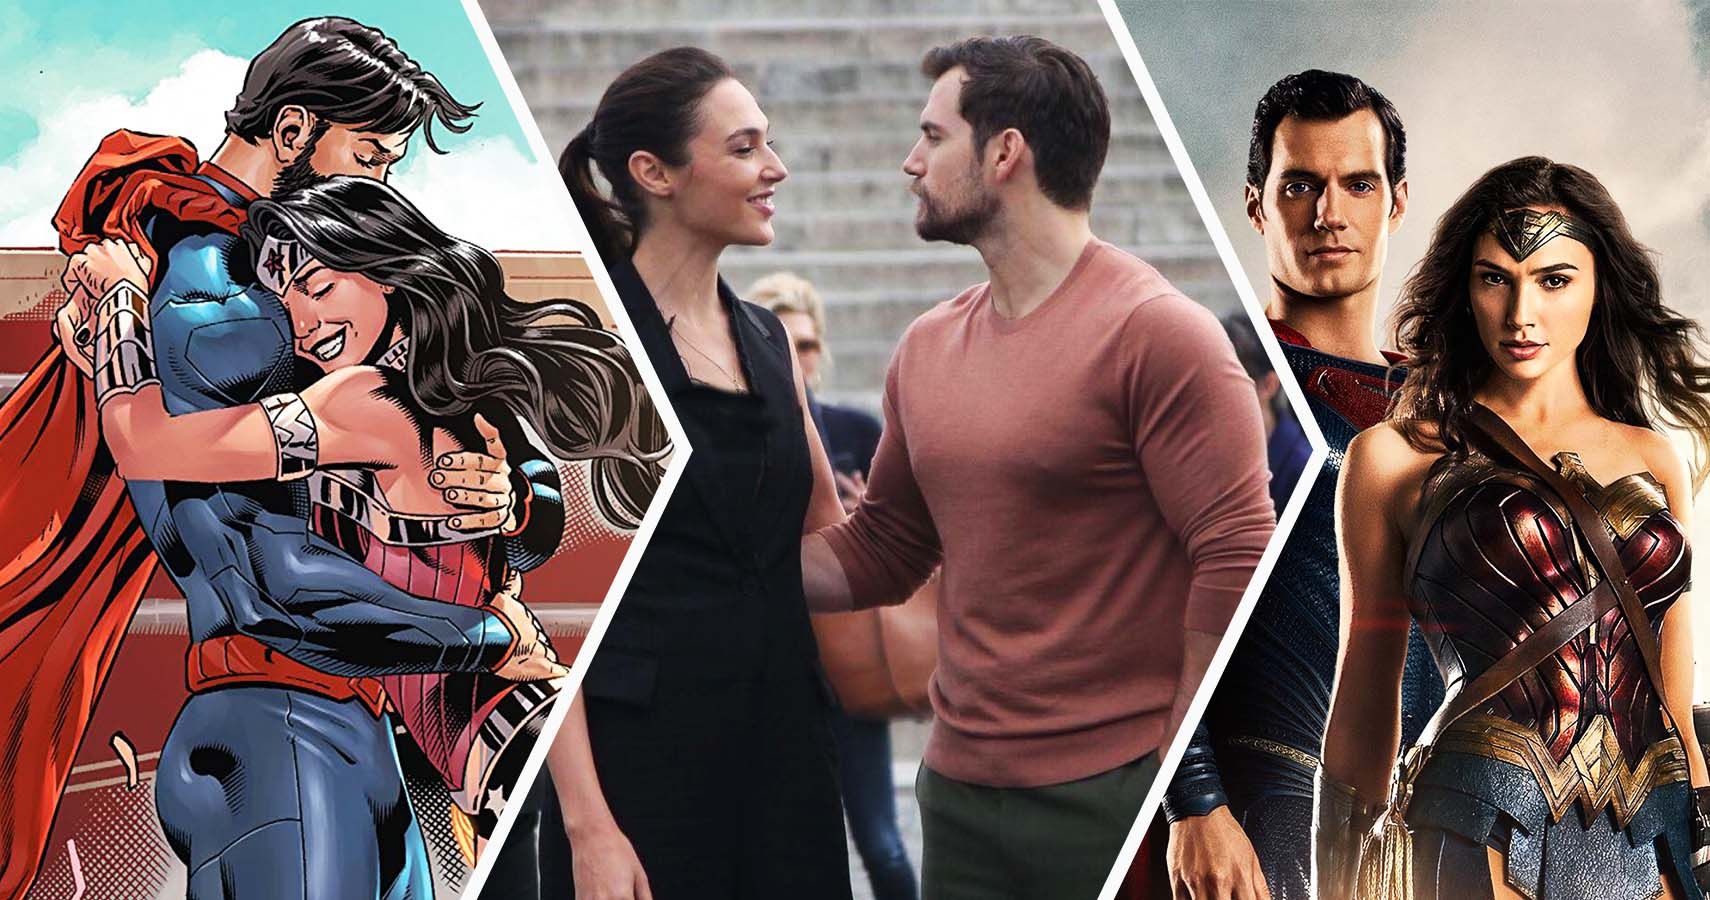 superman și wonder woman dating oc dating de viteză